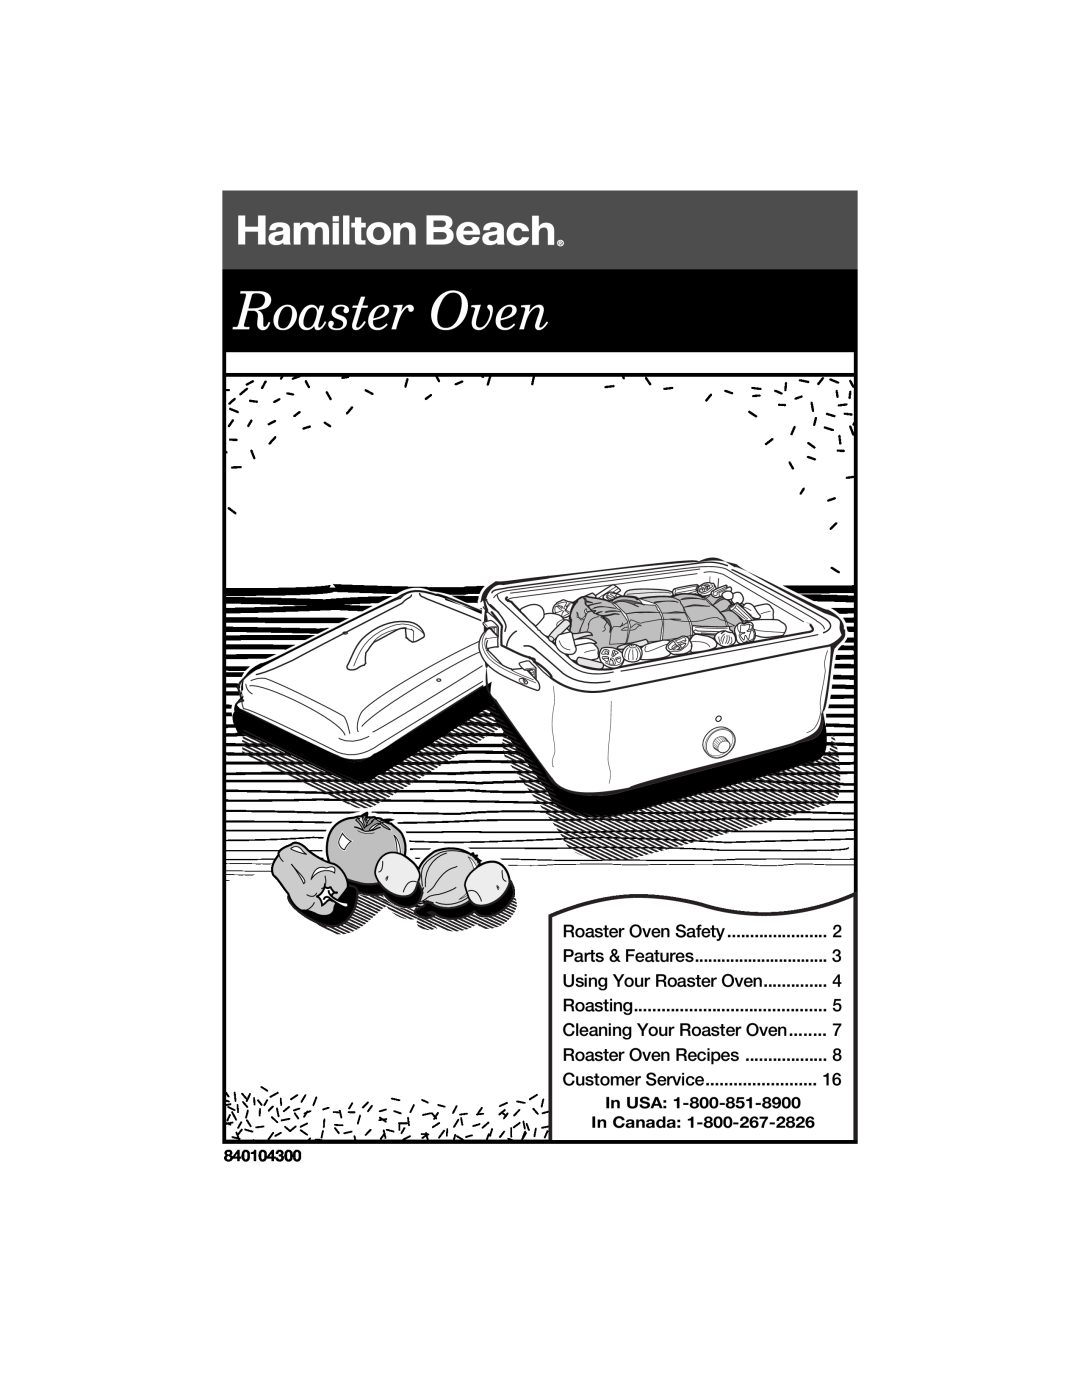 Hamilton Beach 840104300 manual Roaster Oven Safety, Parts & Features, Using Your Roaster Oven, Roaster Oven Recipes 